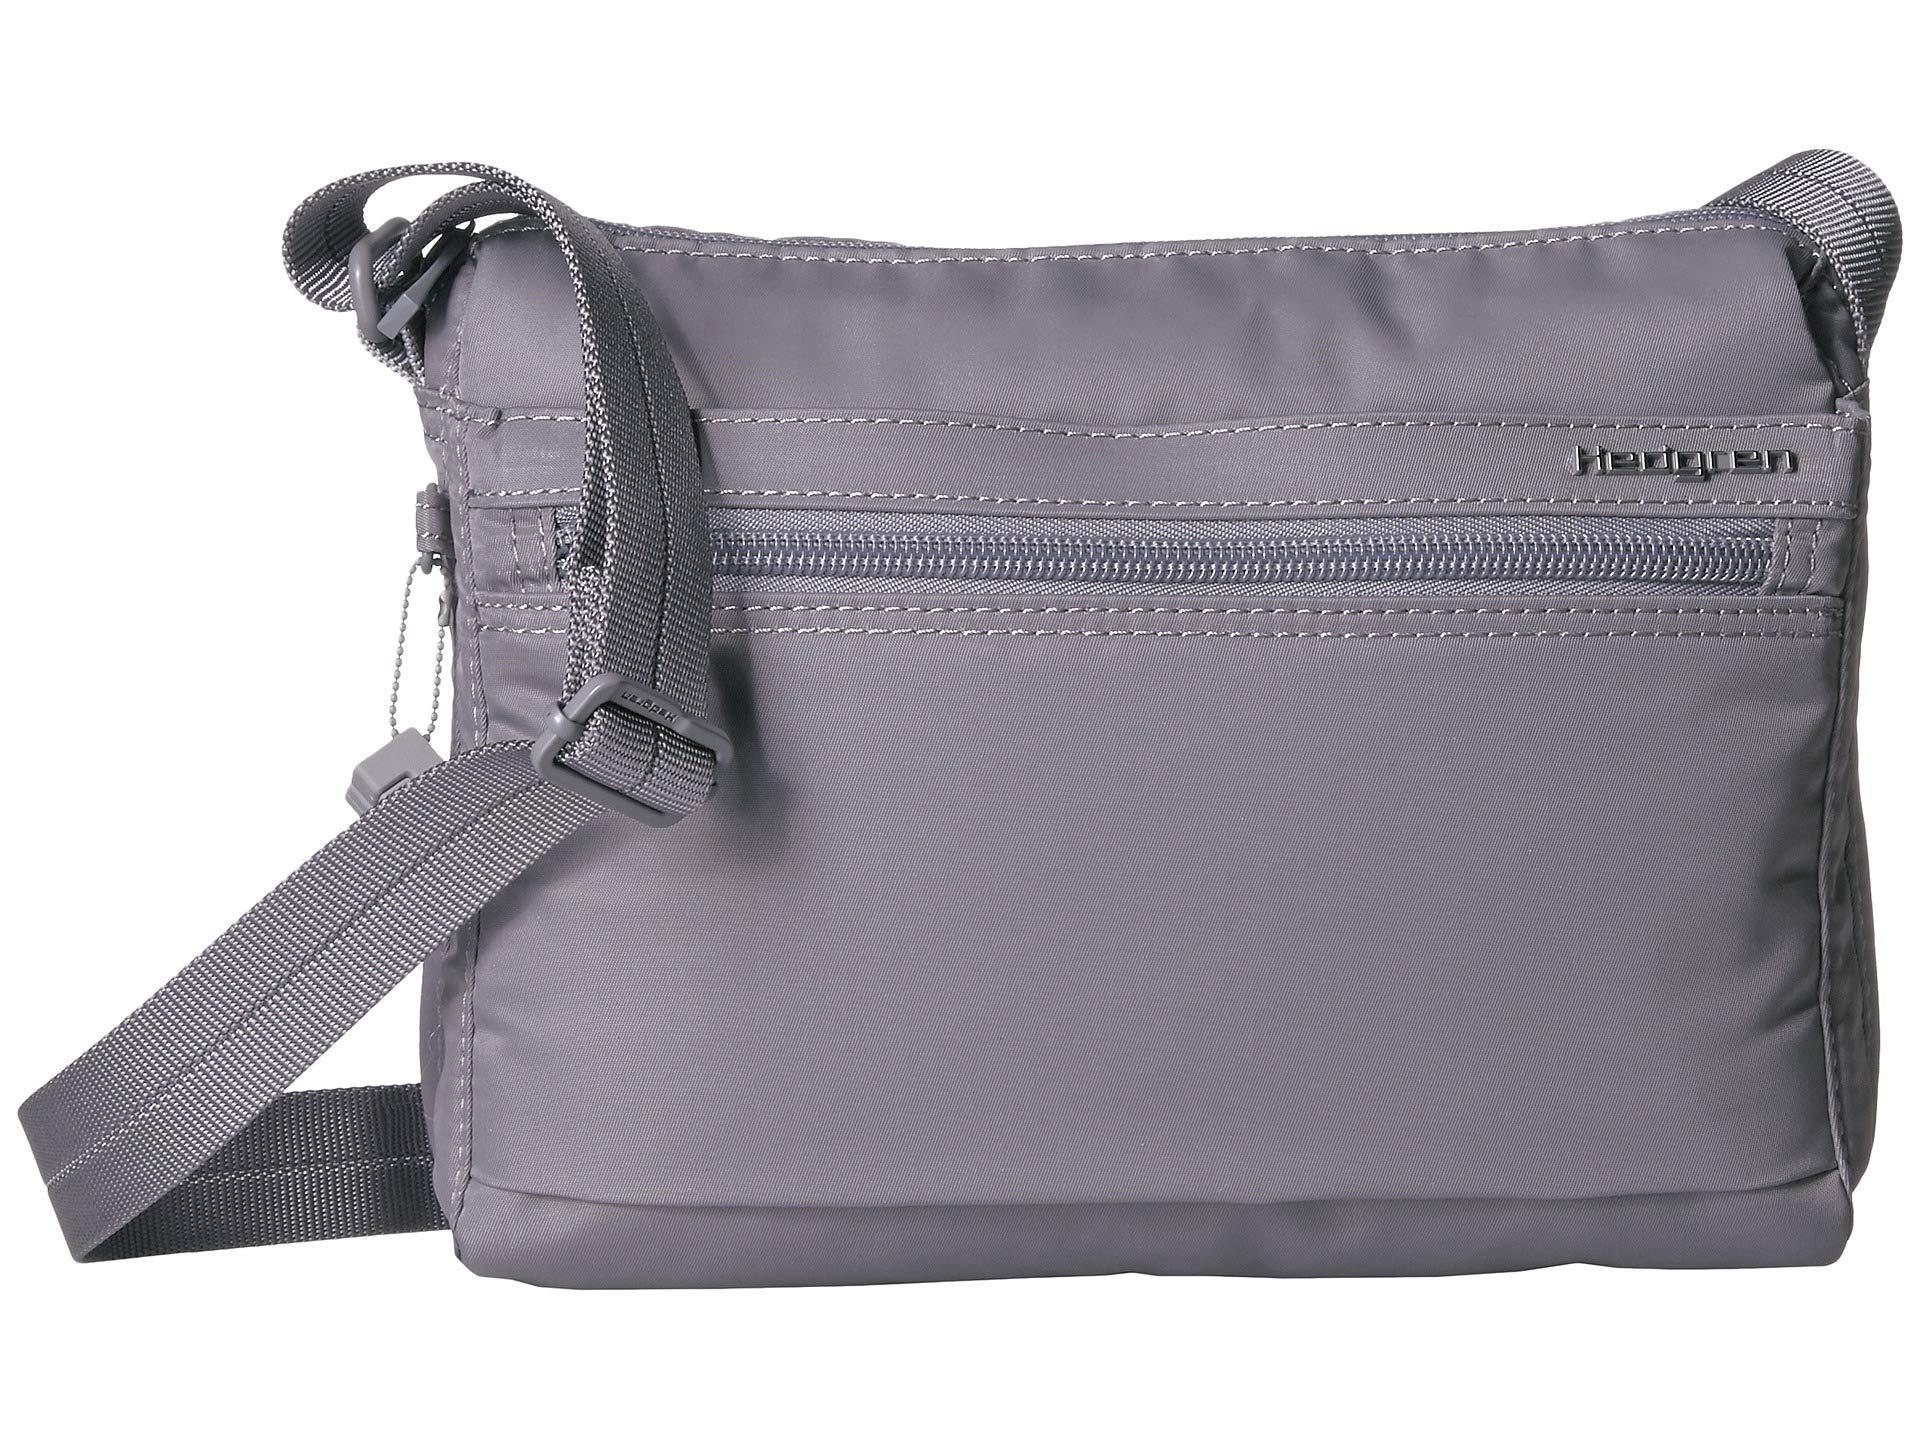 Hedgren Eye Rfid Shoulder Bag in Metallic - Save 25% - Lyst